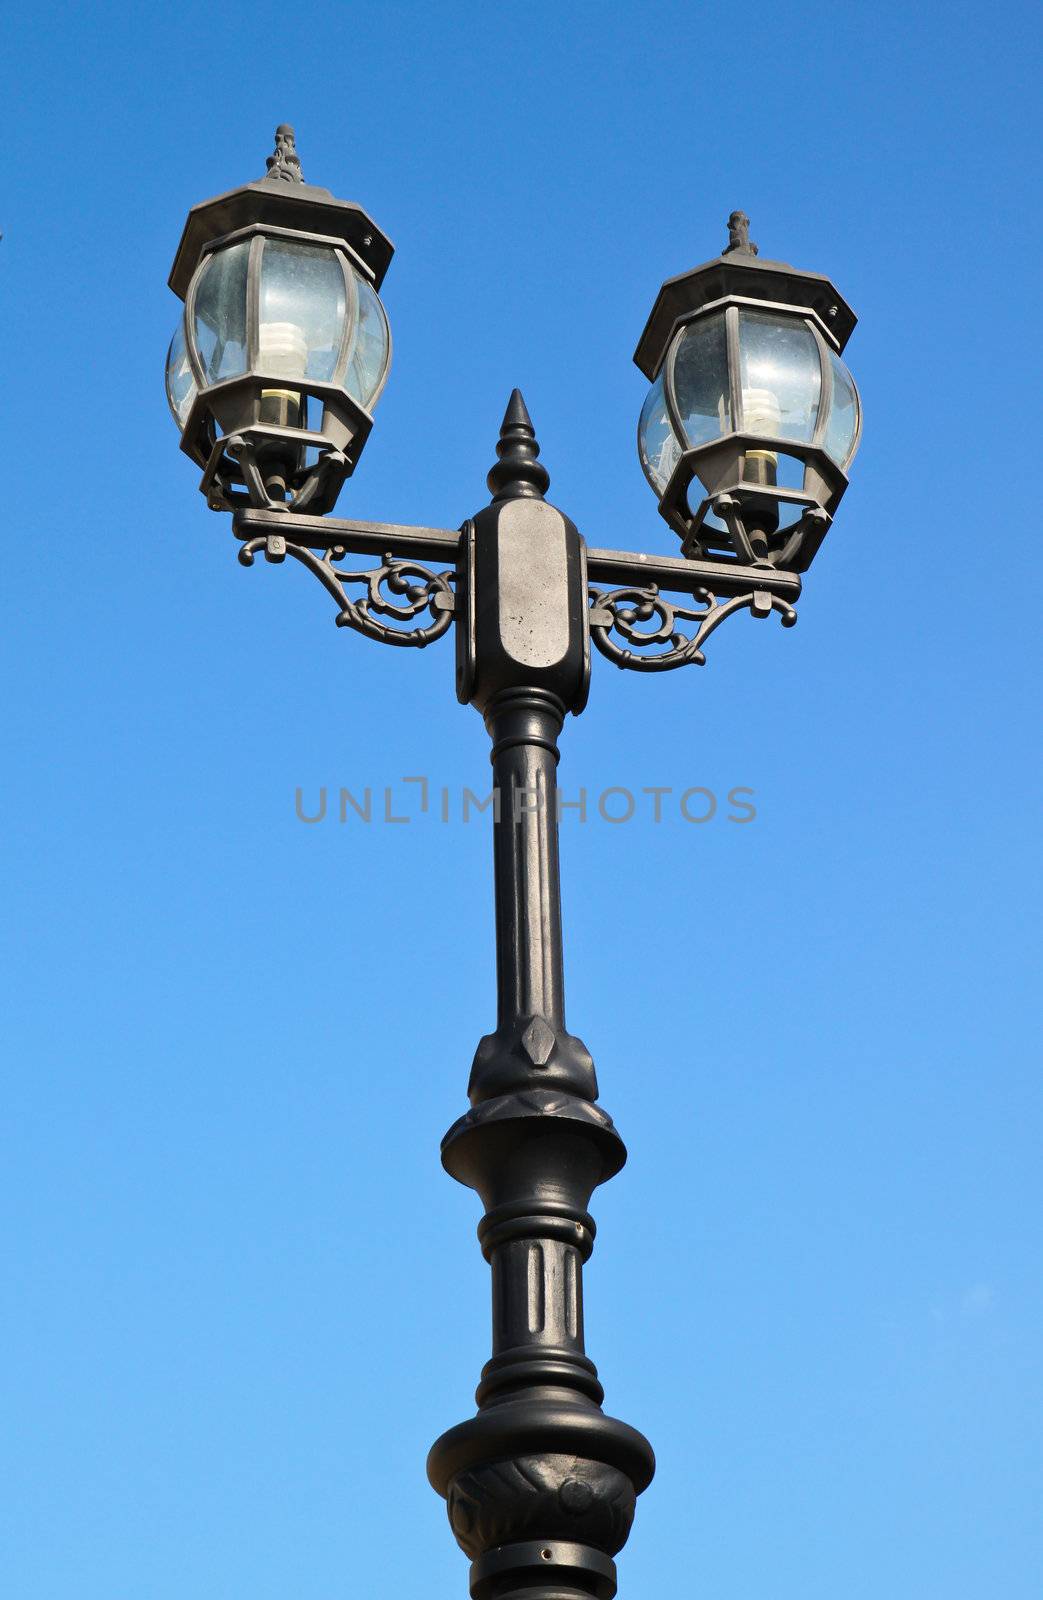 Old vintage street light against blue sky by nuchylee